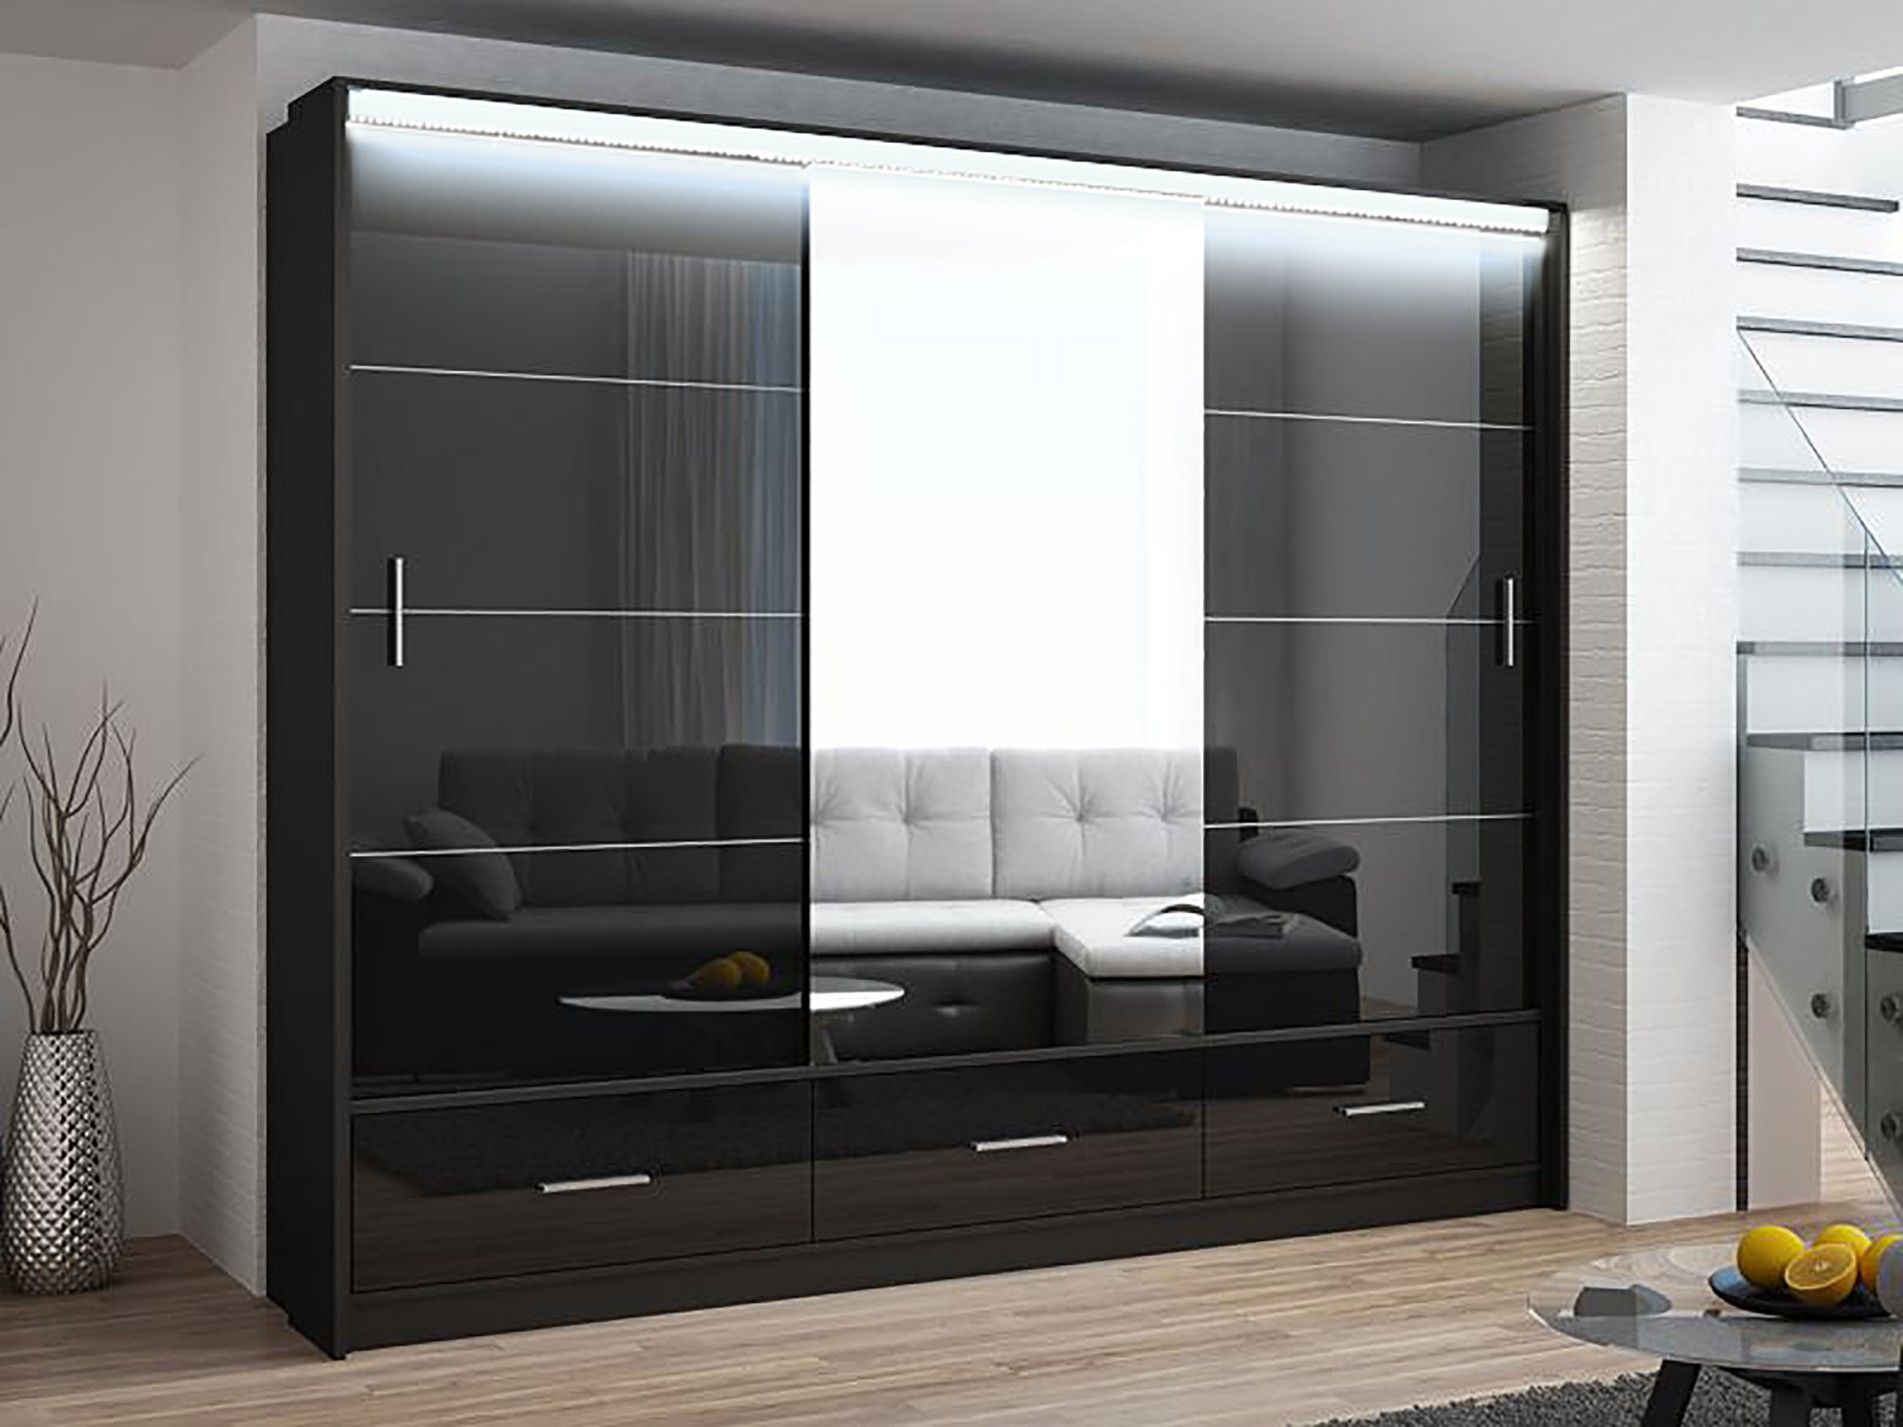 Marsylia Wardrobe, Black Gloss + Mirror 255cm ,hull Furniture Within Gloss Black Wardrobes (View 5 of 15)